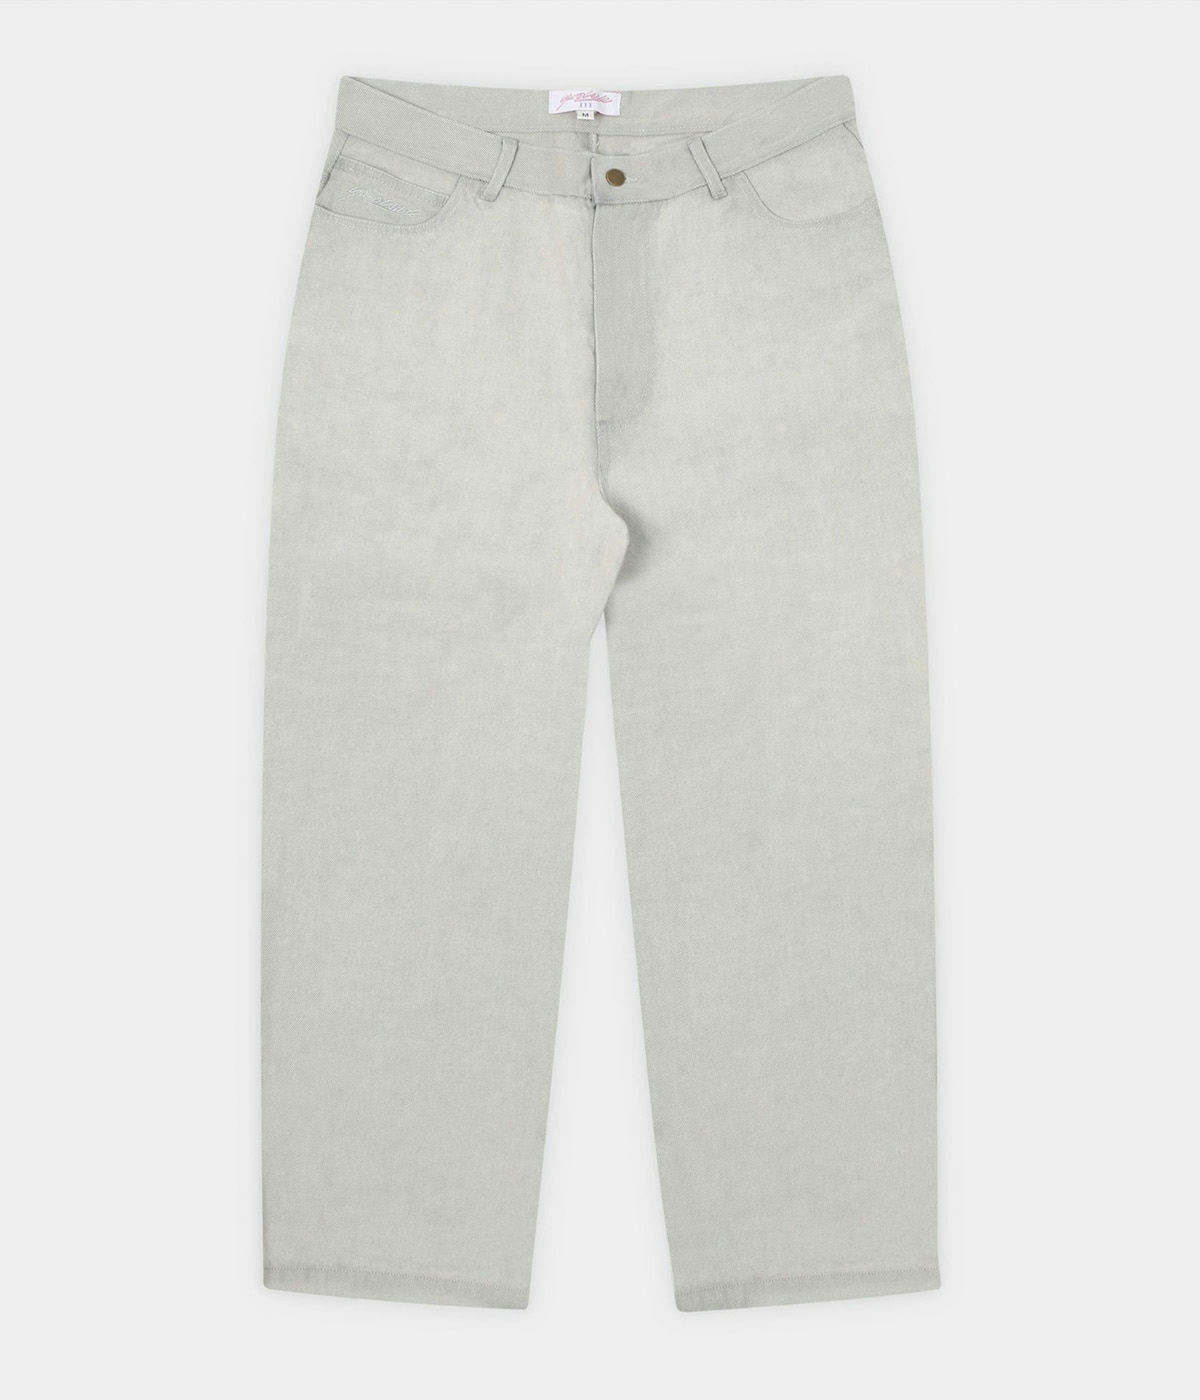 Yardsale Phantasy Jeans Silver 1